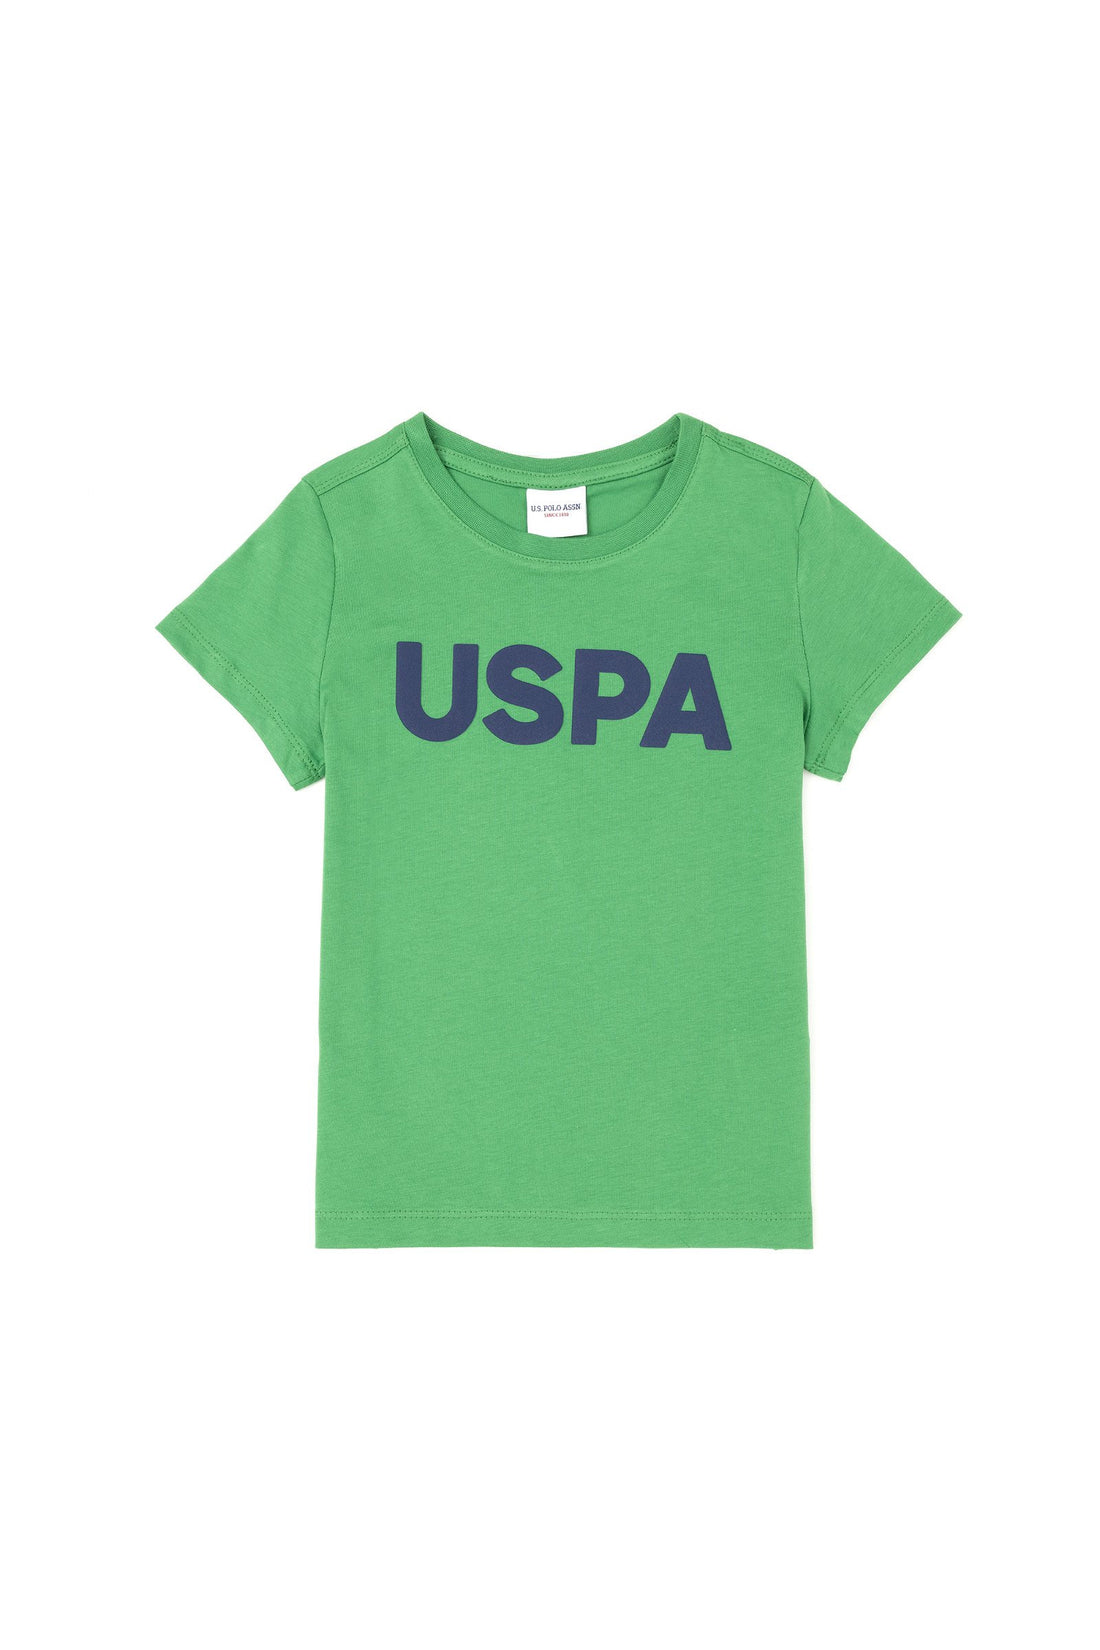 Round Neck T-Shirt With Uspa Logo_G083SZ0110 1795027_VR054_01